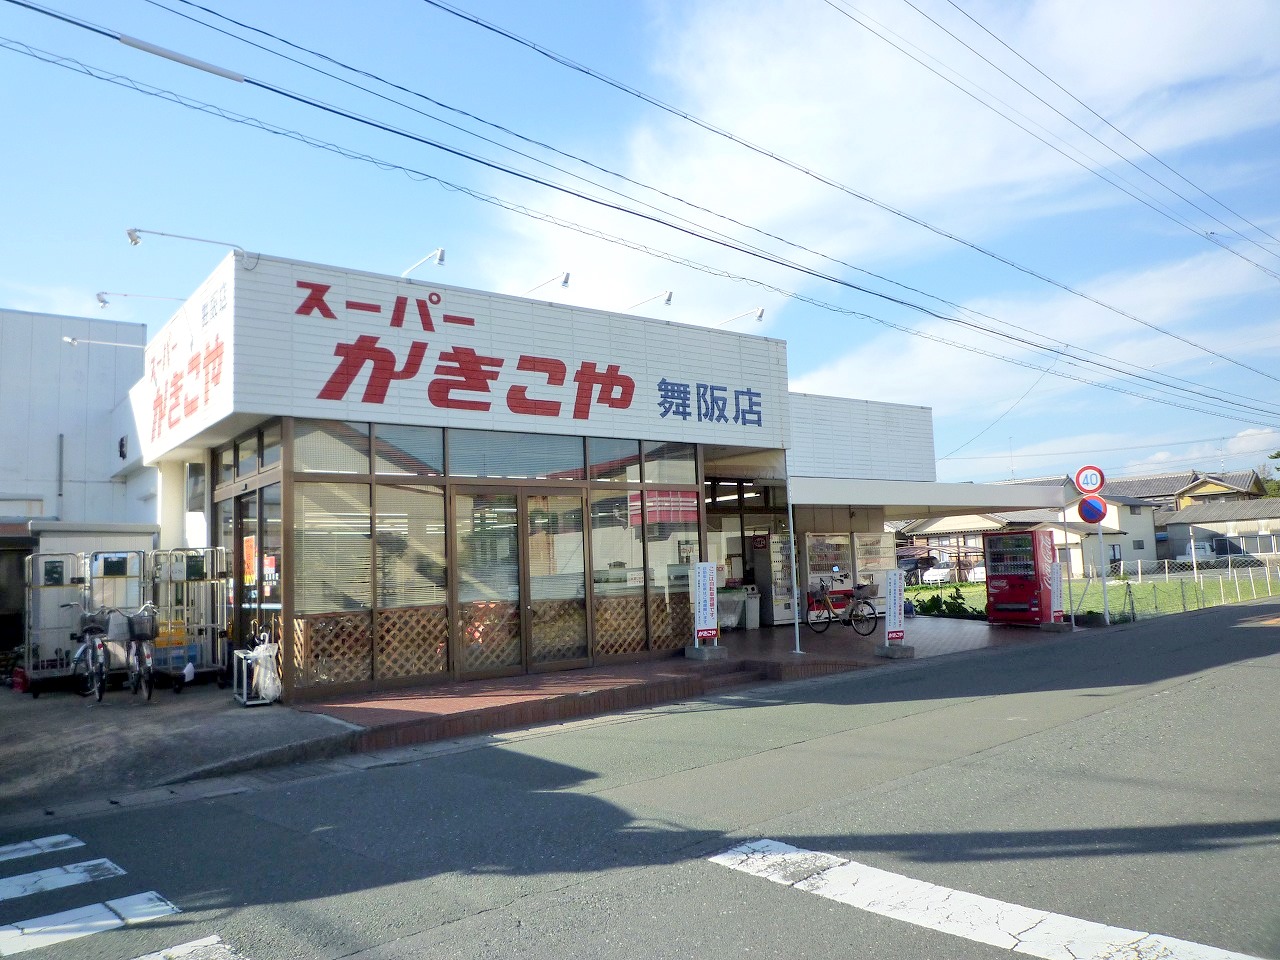 Supermarket. Kakiko and Maisaka store up to (super) 317m